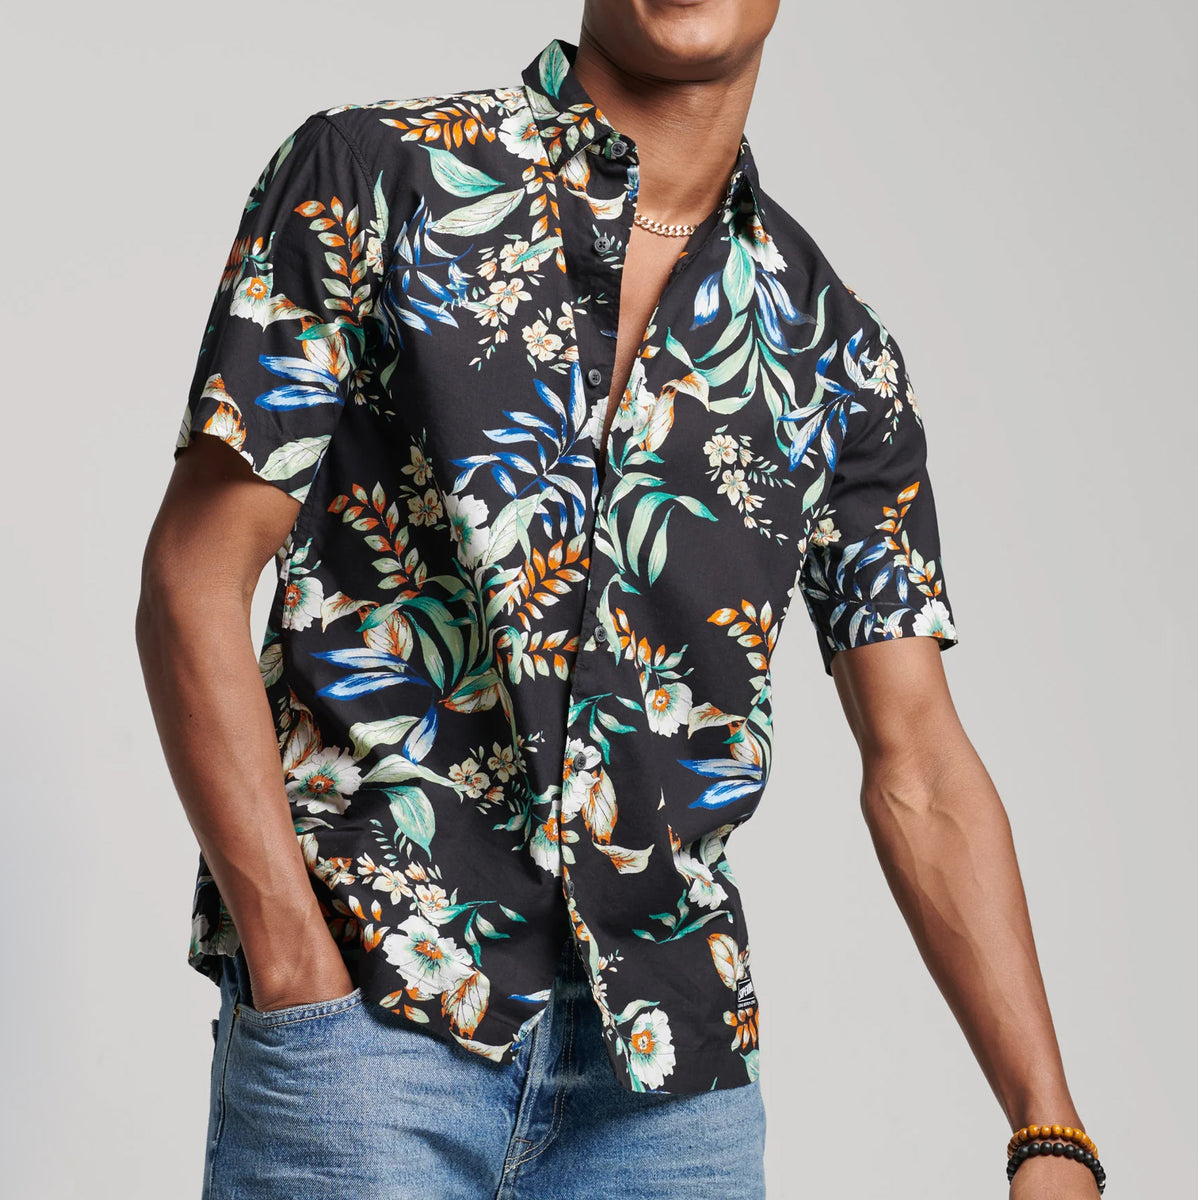 Floral Printed Shirt For Men – Yard of Deals